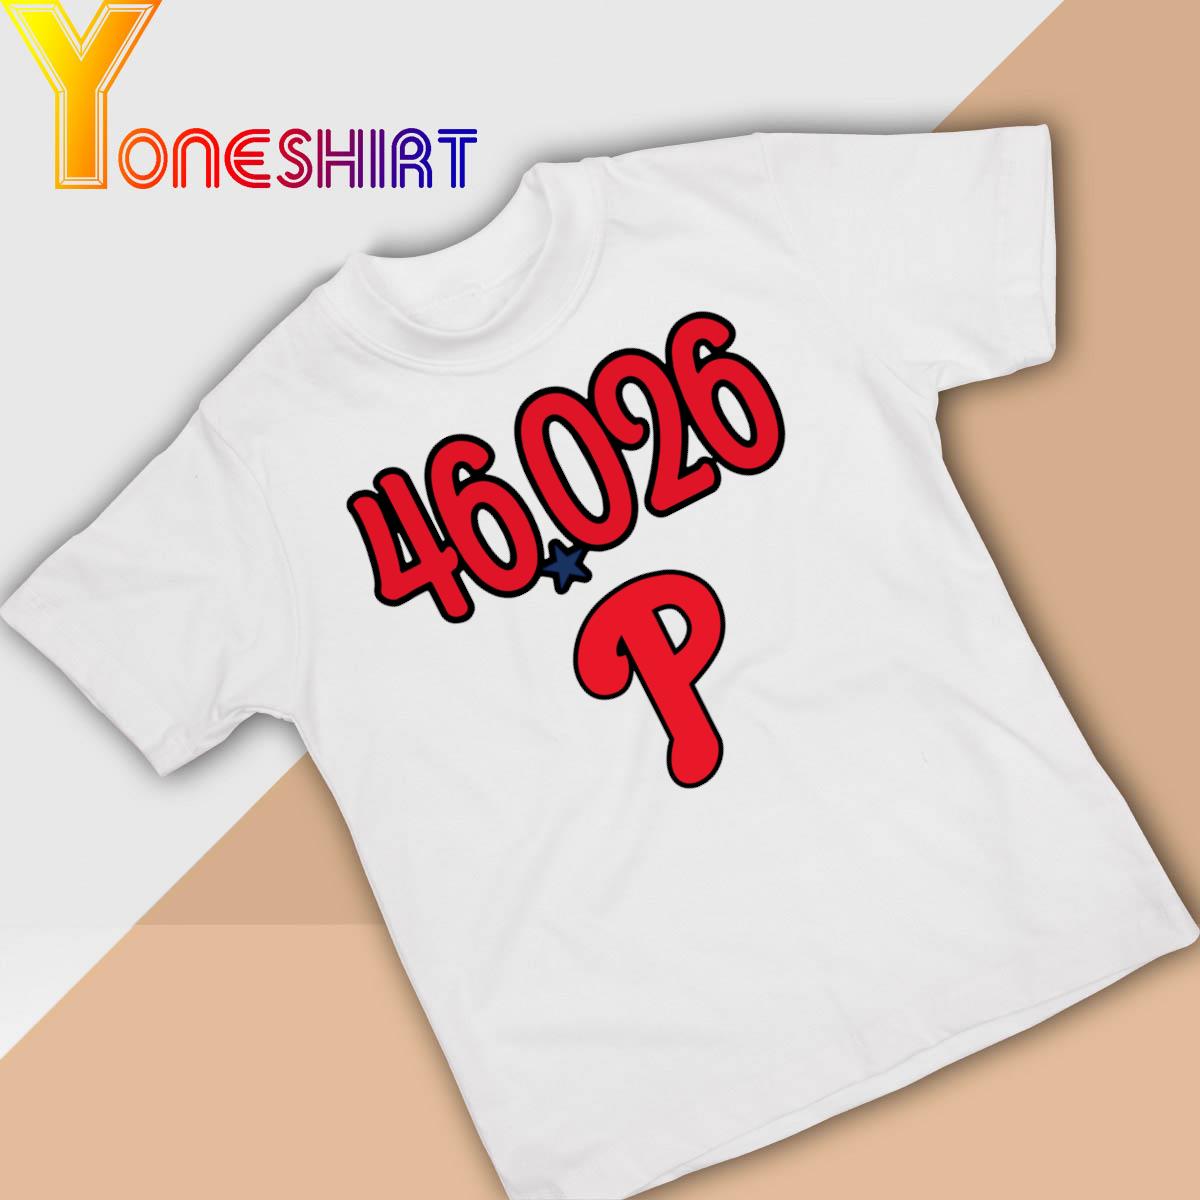 The Phillies 46 026 logo 2022 shirt